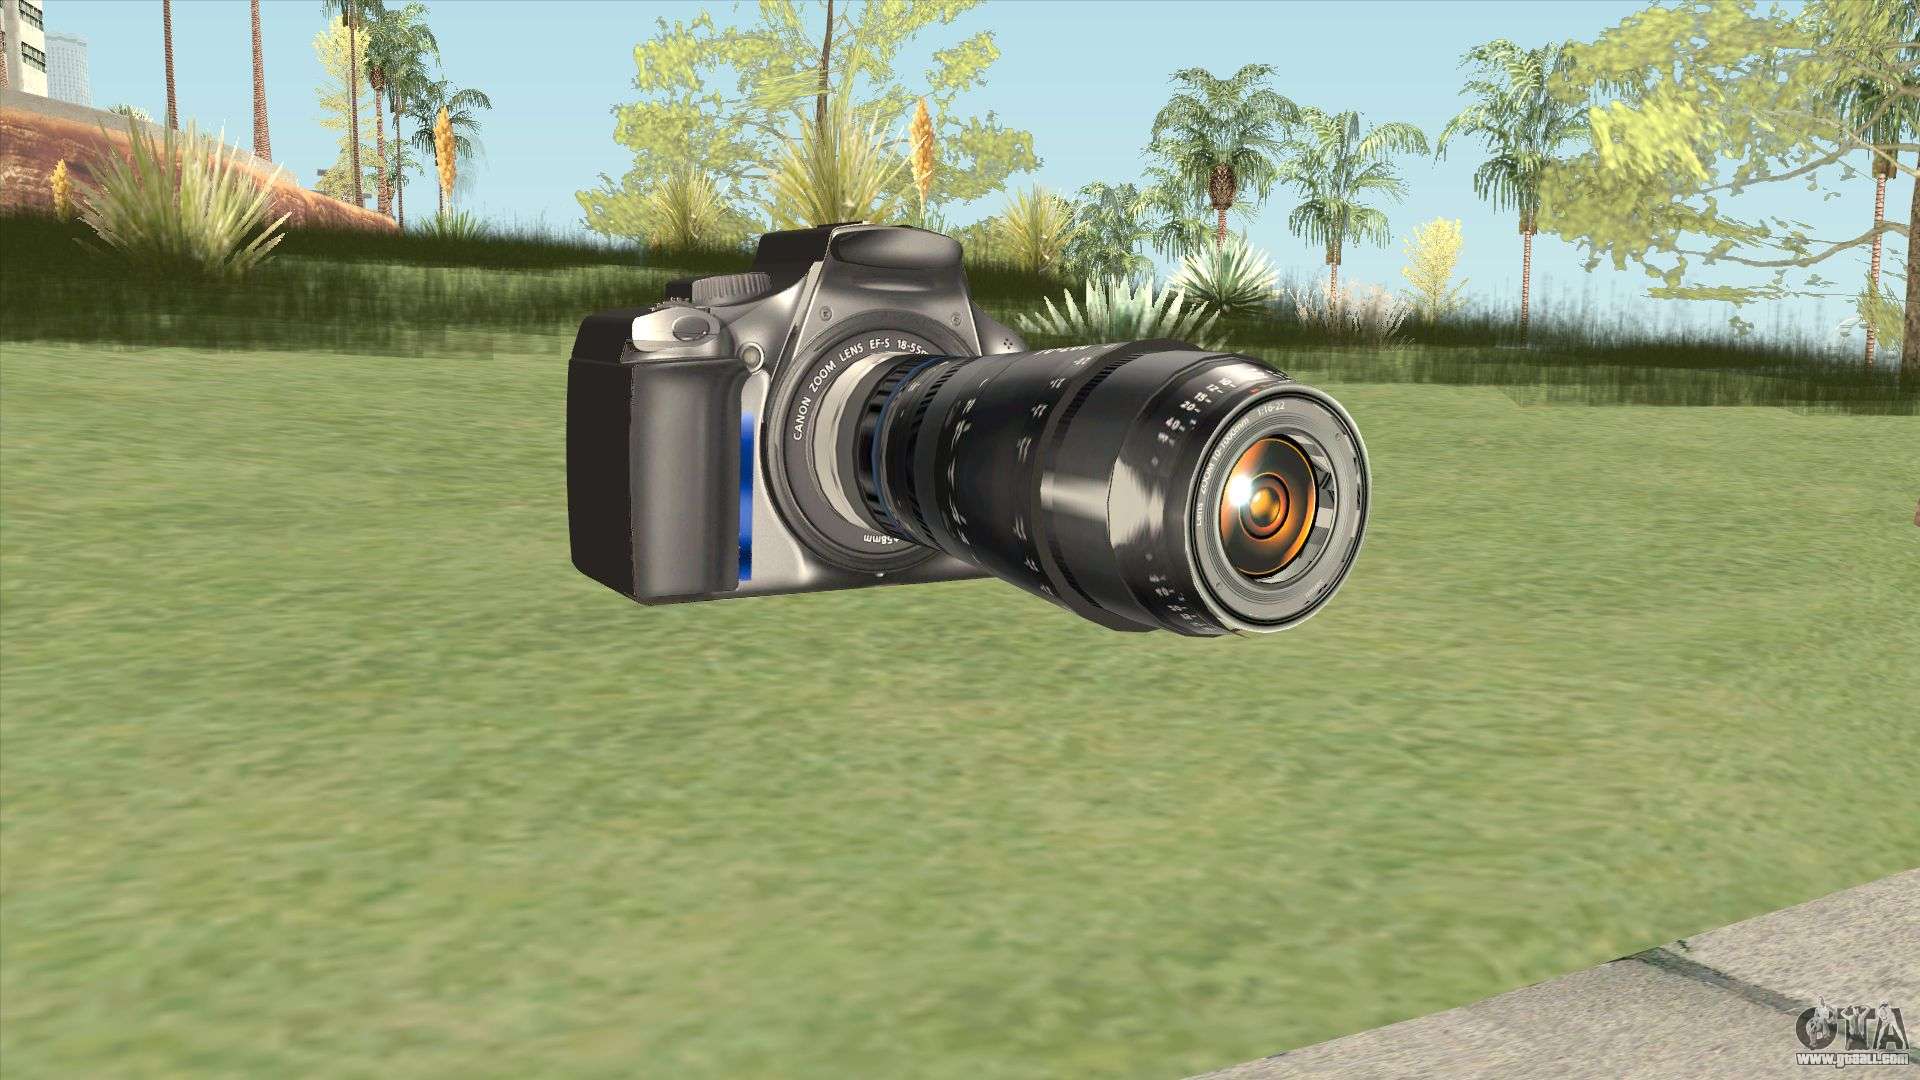 Download Camera Cutscene Helper v1.0 for GTA San Andreas